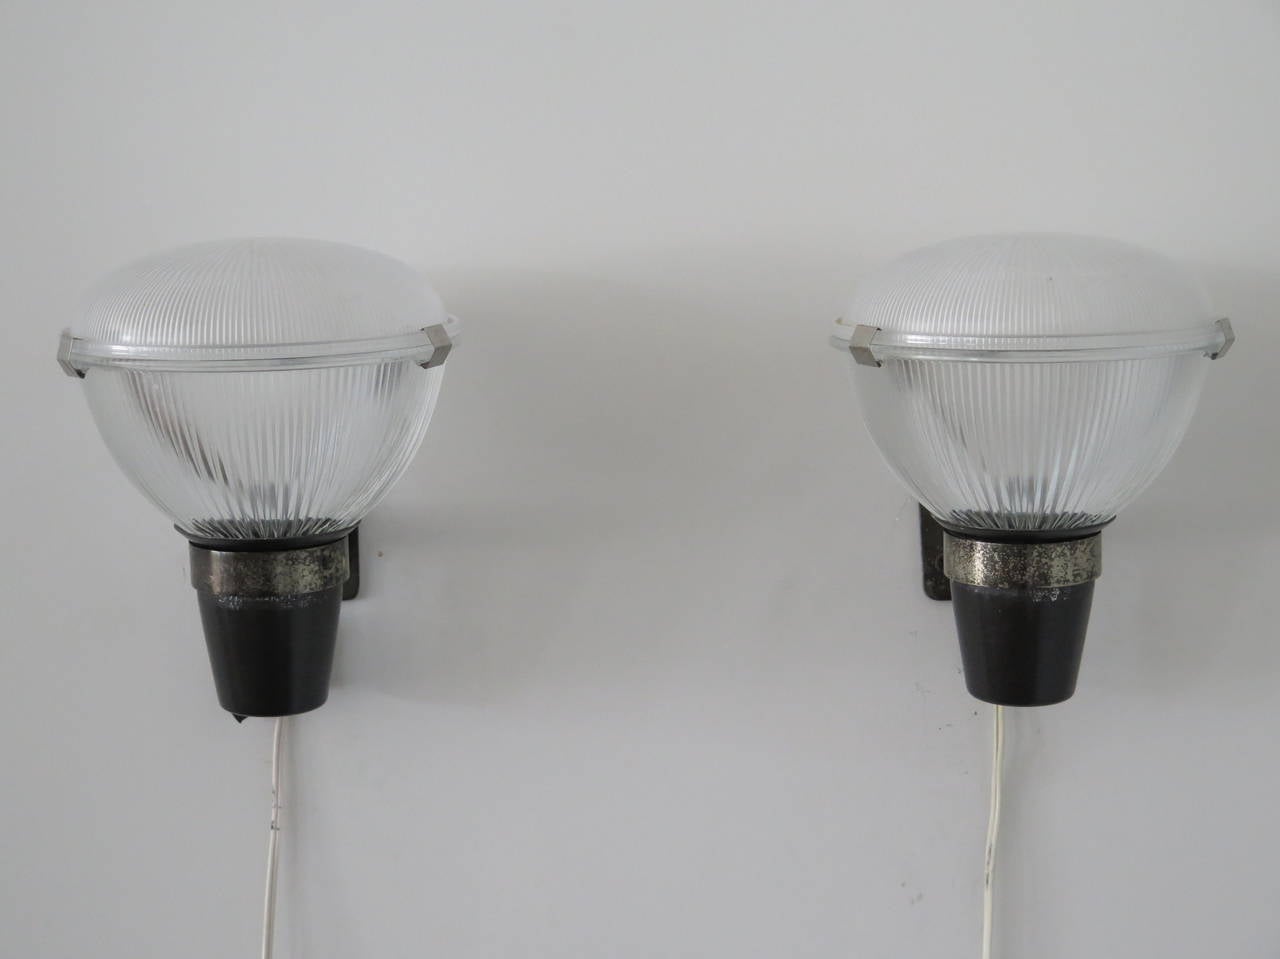 A pair of Ignazio Gardella wall lights (sconces) for Azucena, circa 1960s.